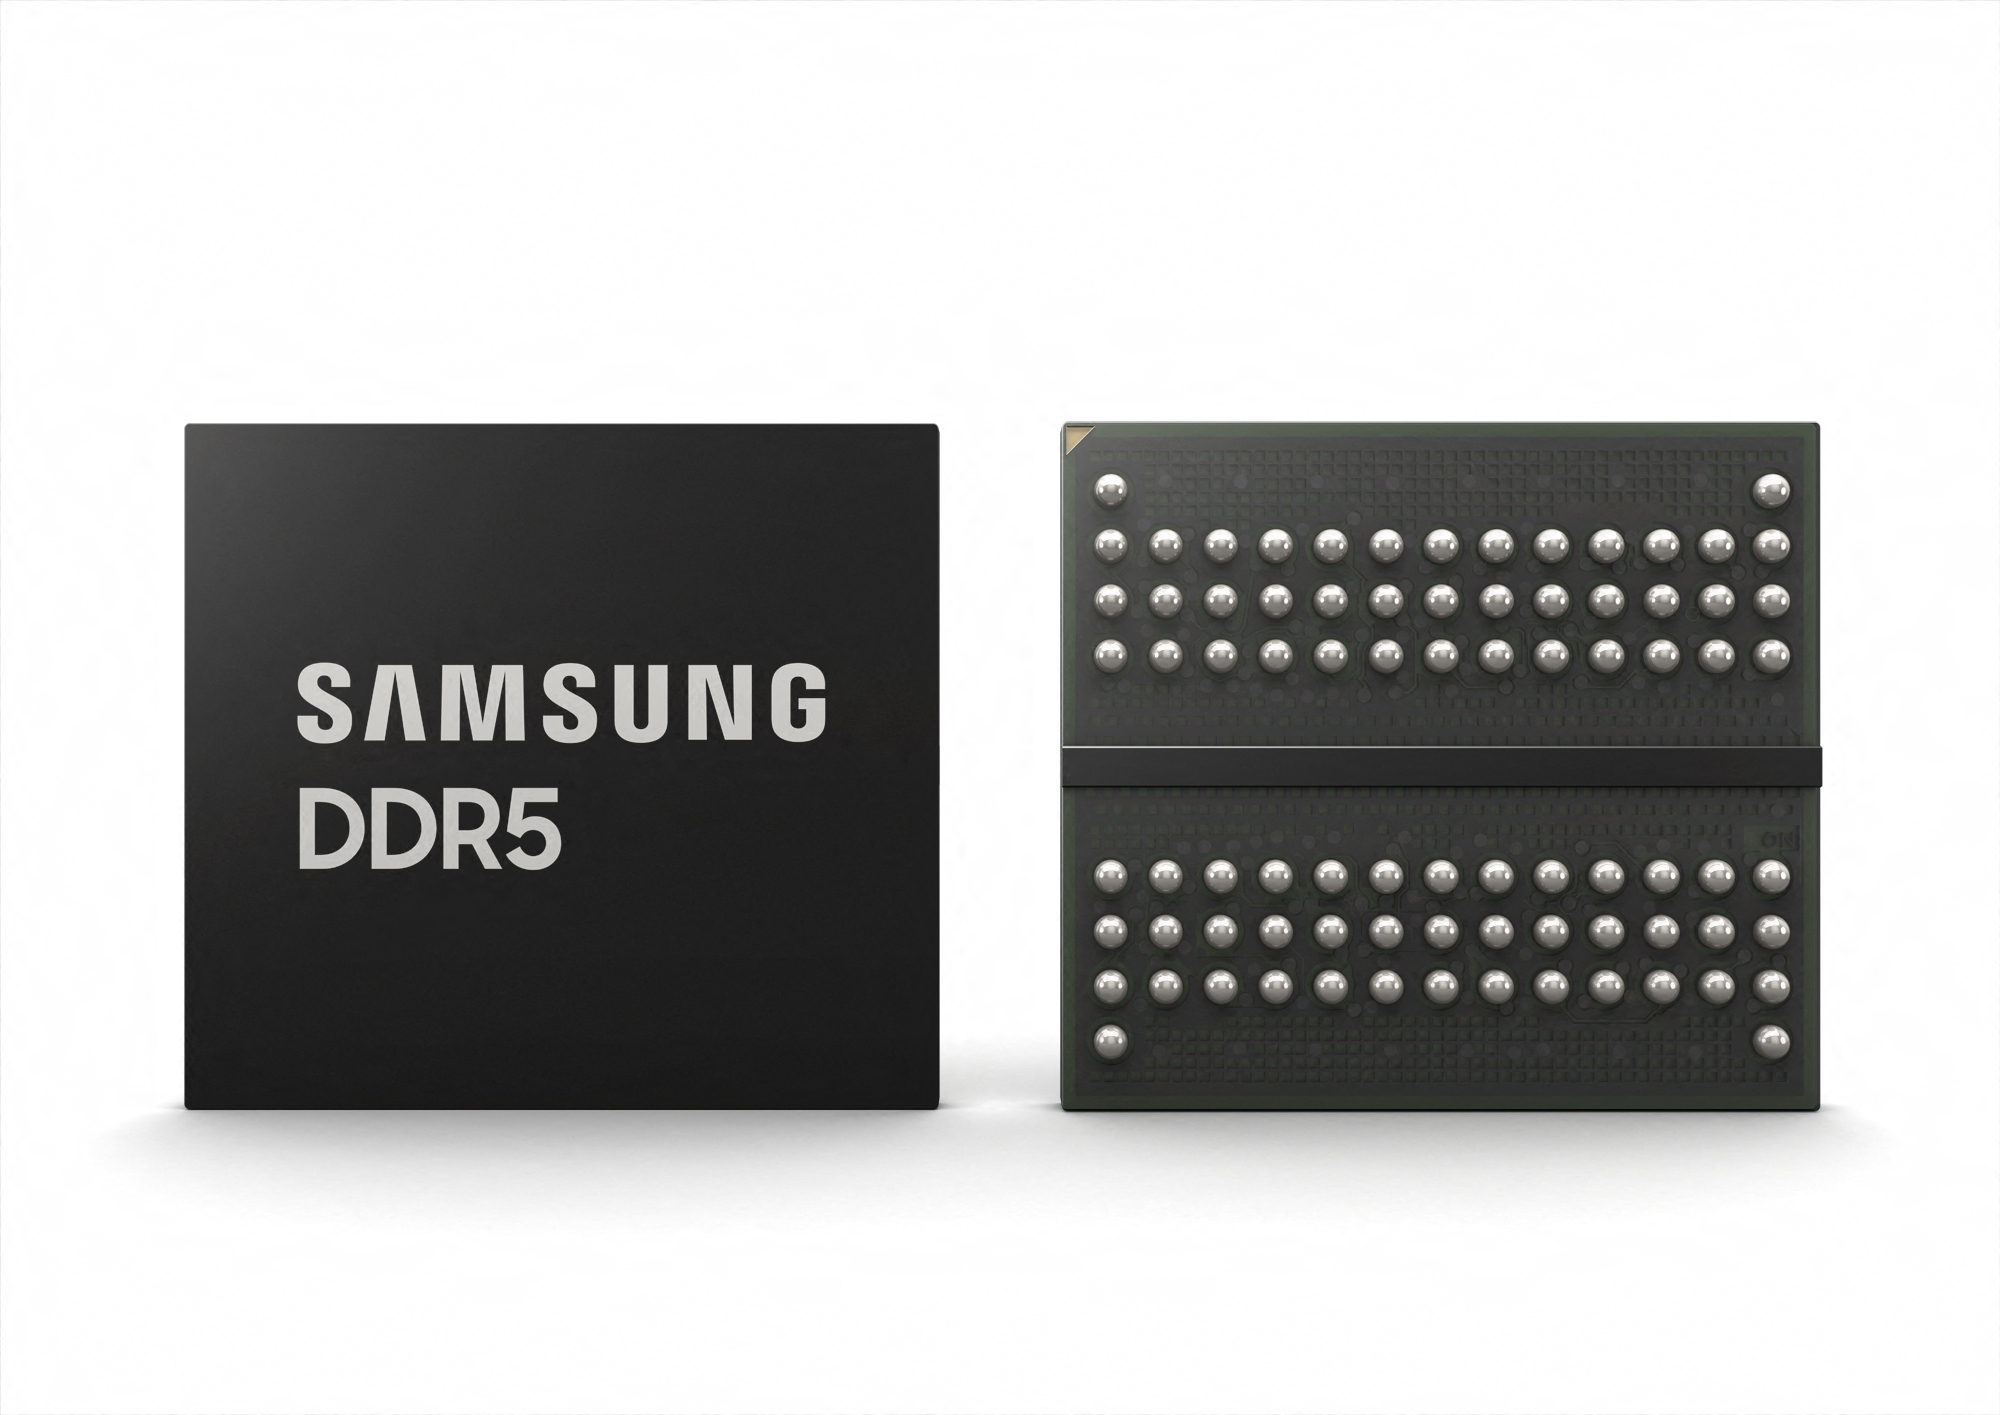 Samsung Starts Mass Production of Most Advanced 14nm EUV DDR5 DRAM